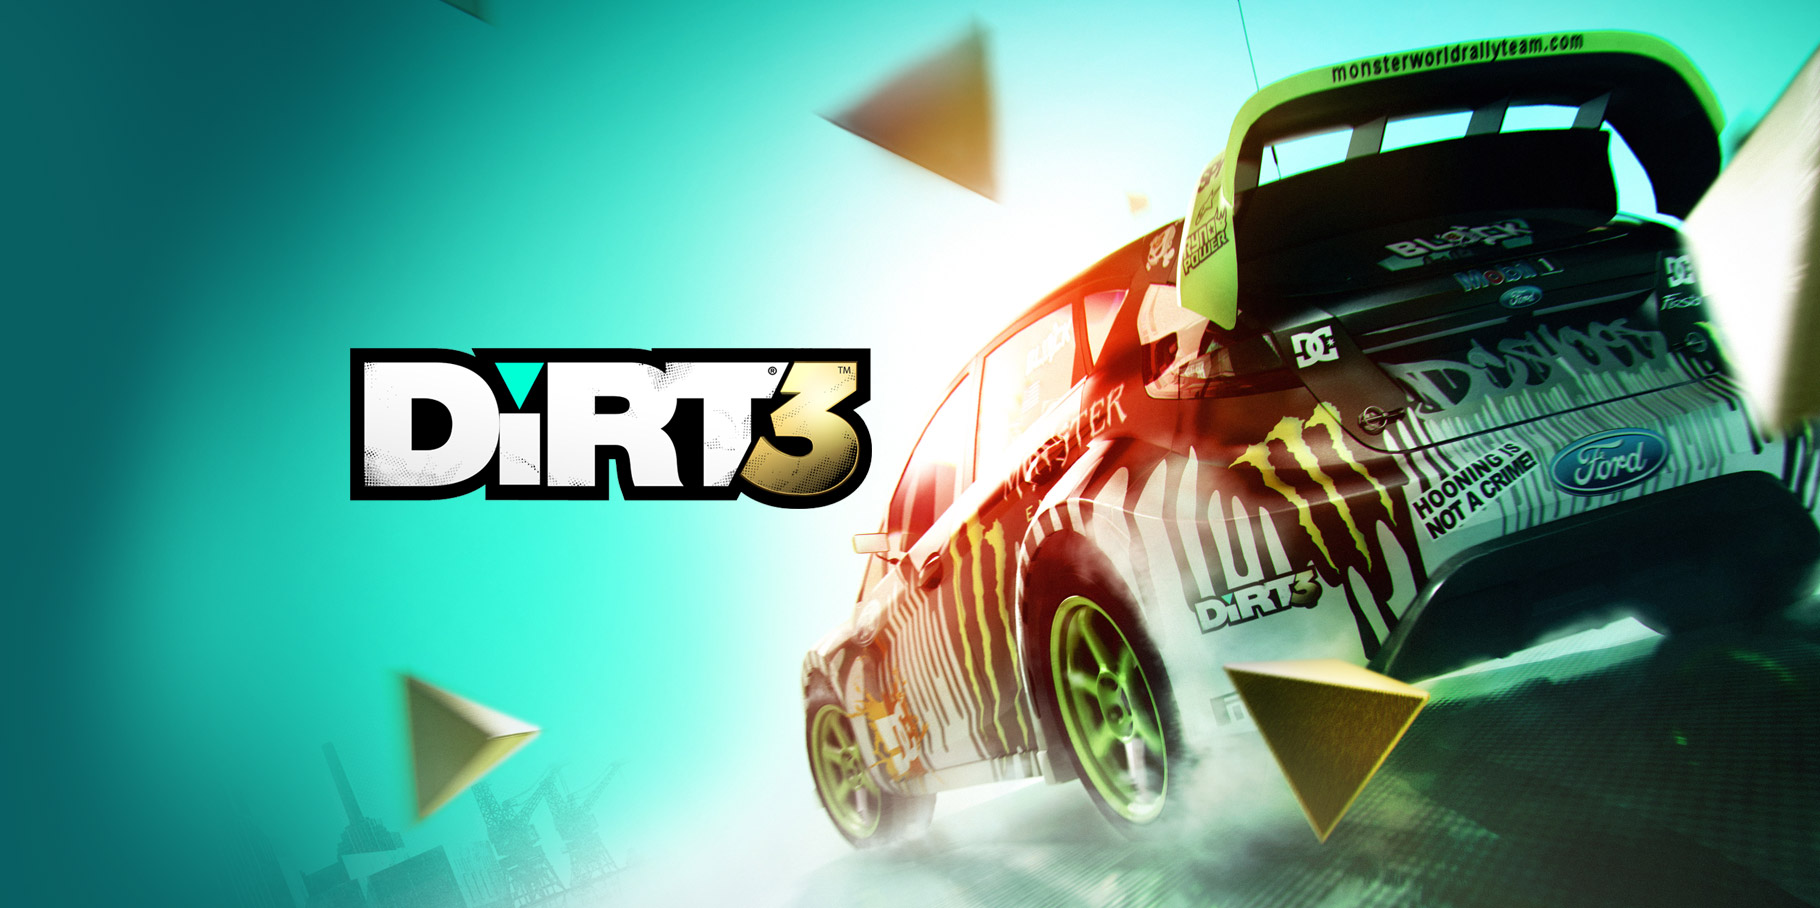 Dirt 3 Version Full Game Free Download